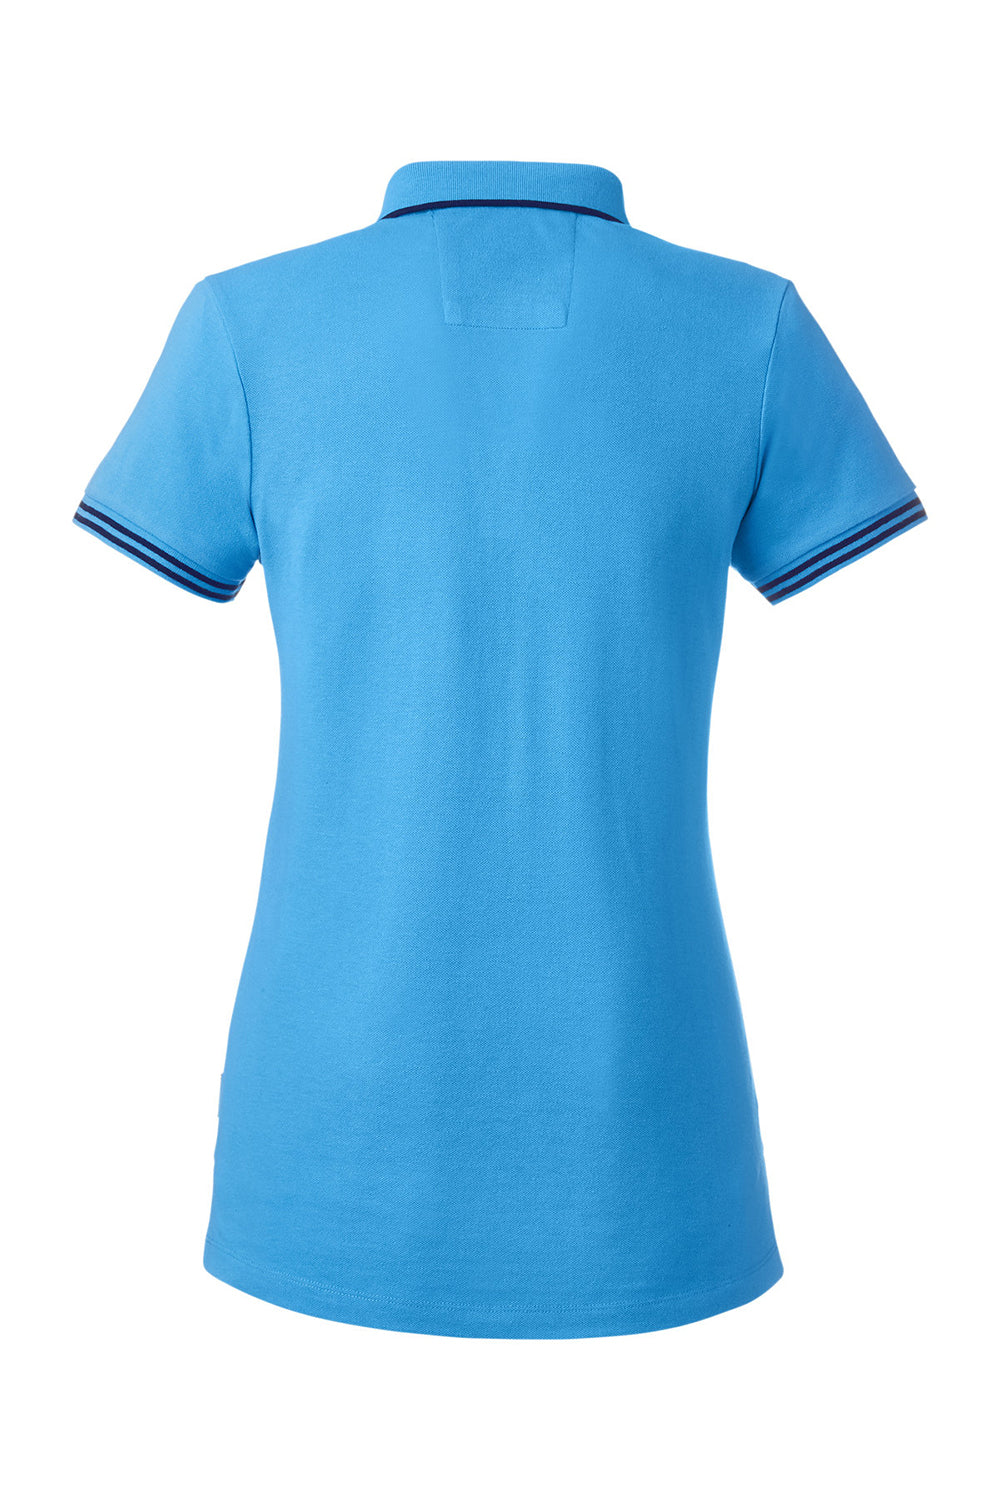 Nautica N17168 Womens Desk Short Sleeve Polo Shirt Azure Blue/Navy Blue Flat Back